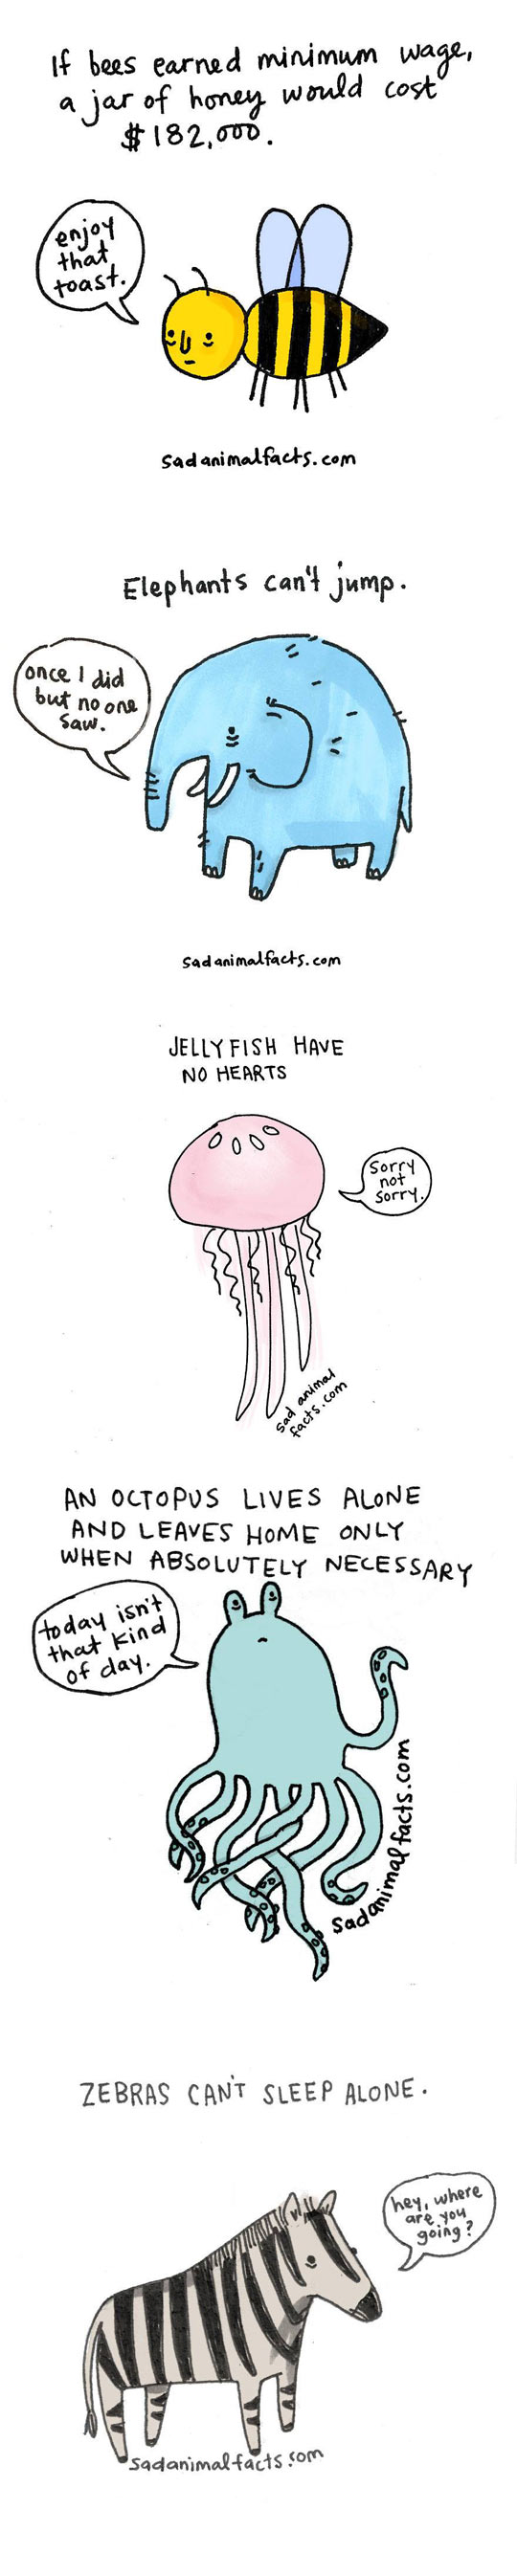 funny-sad-animal-facts-dog-octopus